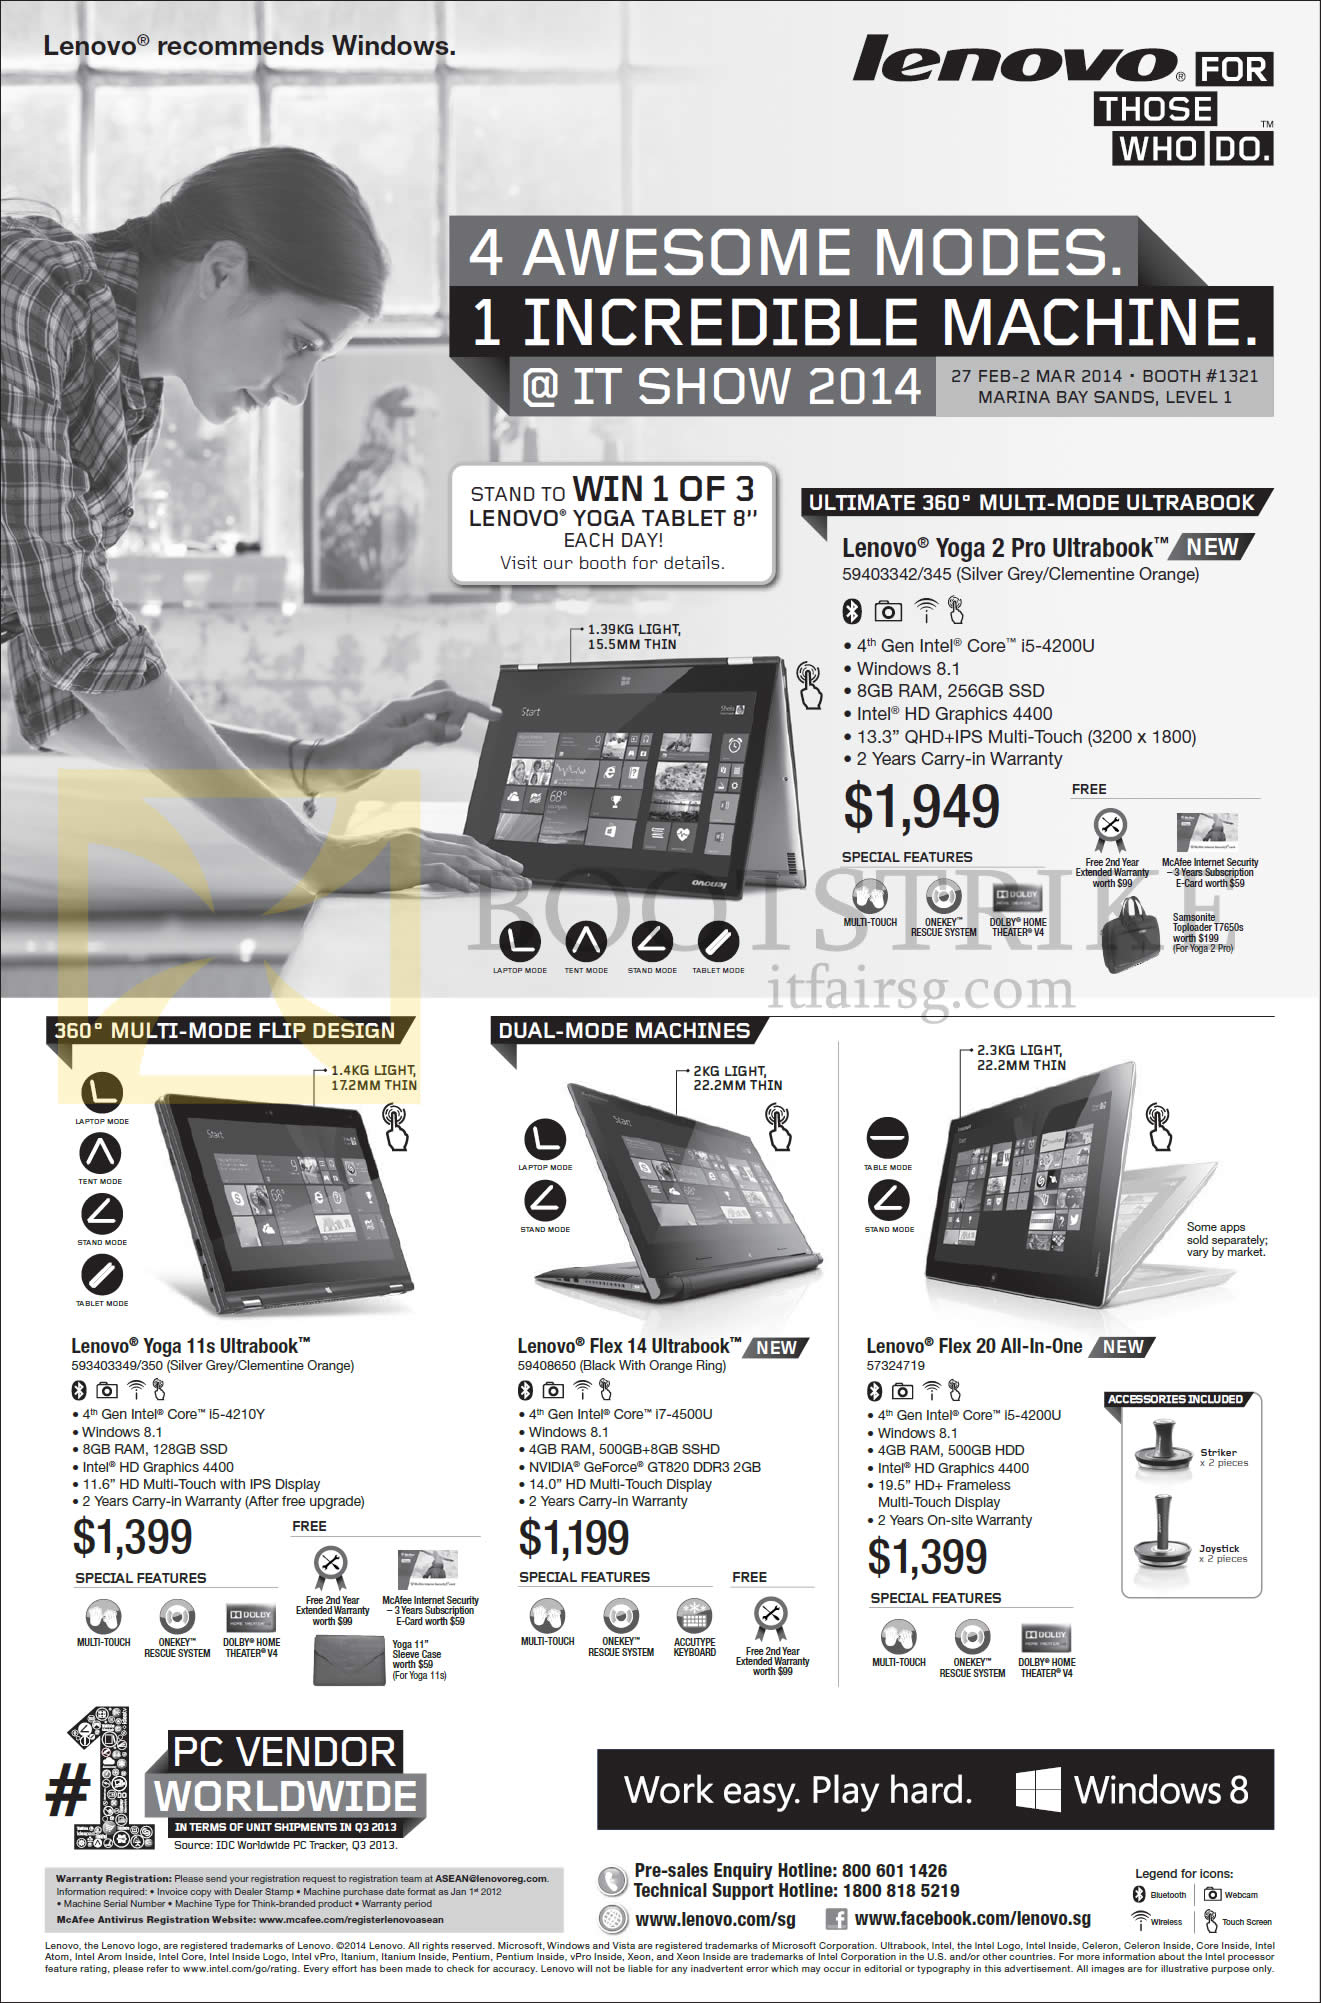 IT SHOW 2014 price list image brochure of Lenovo Notebooks Yoga 2 Pro, 11s, Flex 14, 20